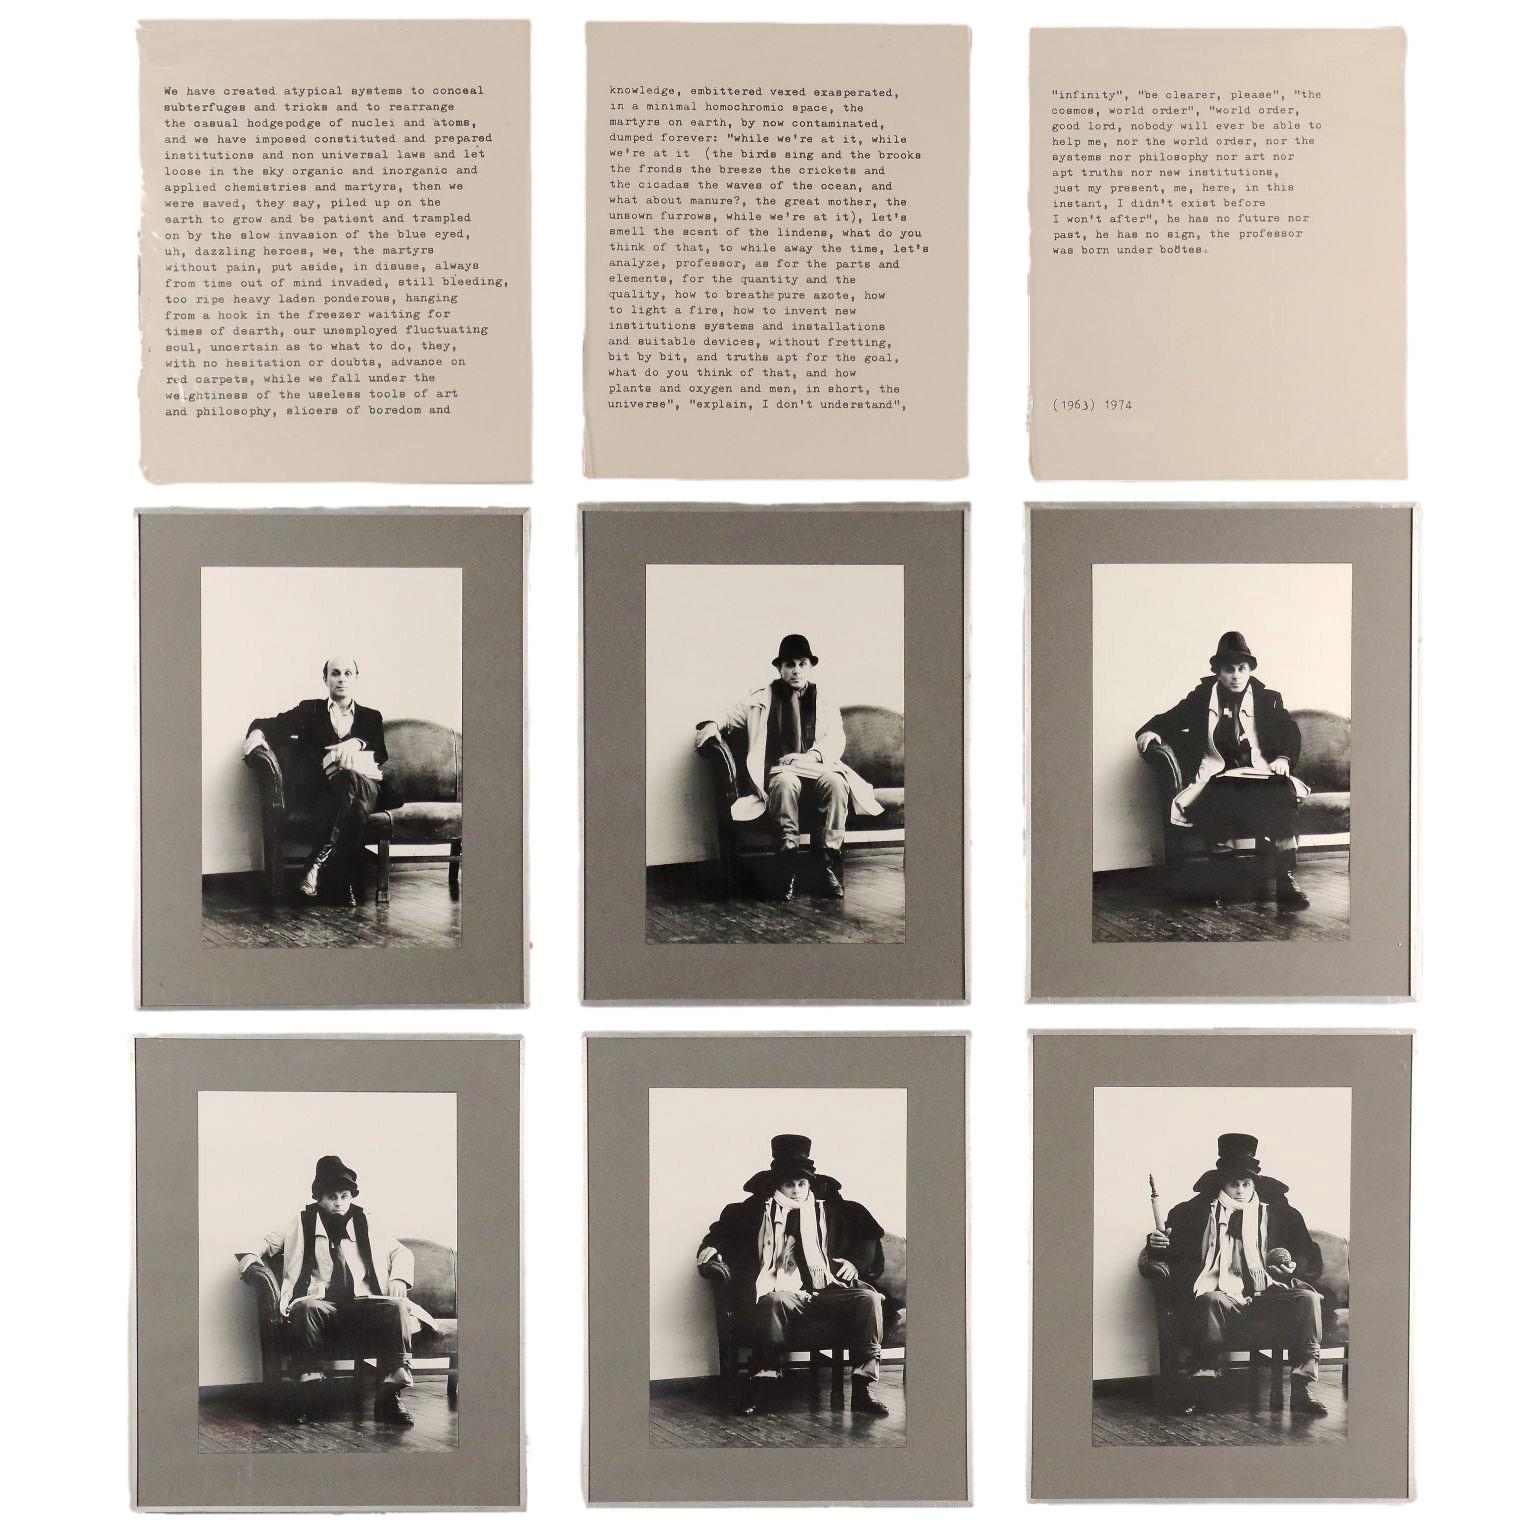 Cioni Carpi Black and White Photograph – Wir haben Atipici Sistemi 1963/74 geschaffen